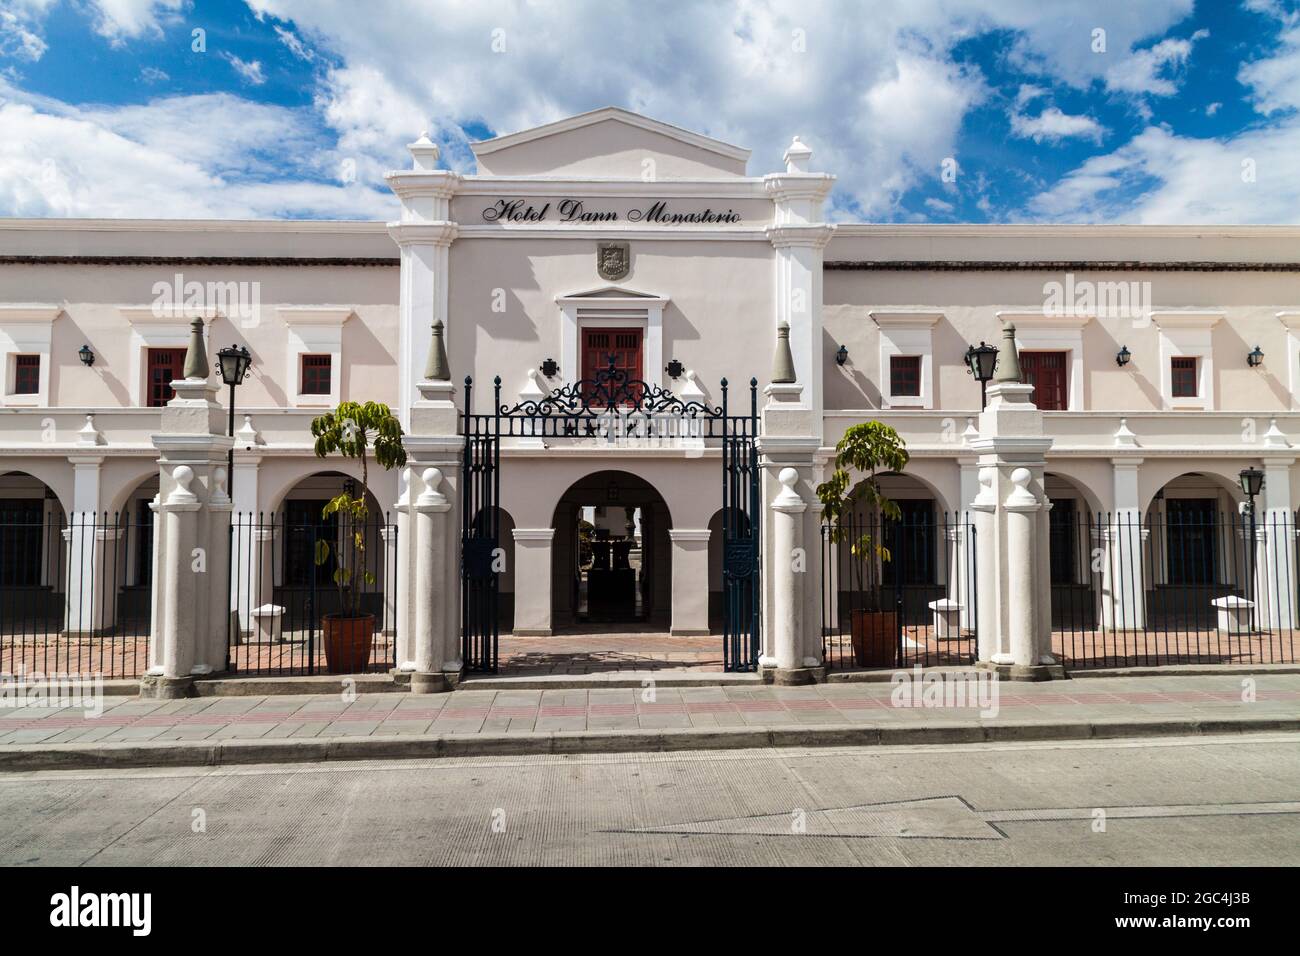 POPAYAN, KOLUMBIEN - 10. SEPTEMBER 2015: Eingang zum Hotel dann Monasterio in der Kolonialstadt Popayan, Kolumbien Stockfoto